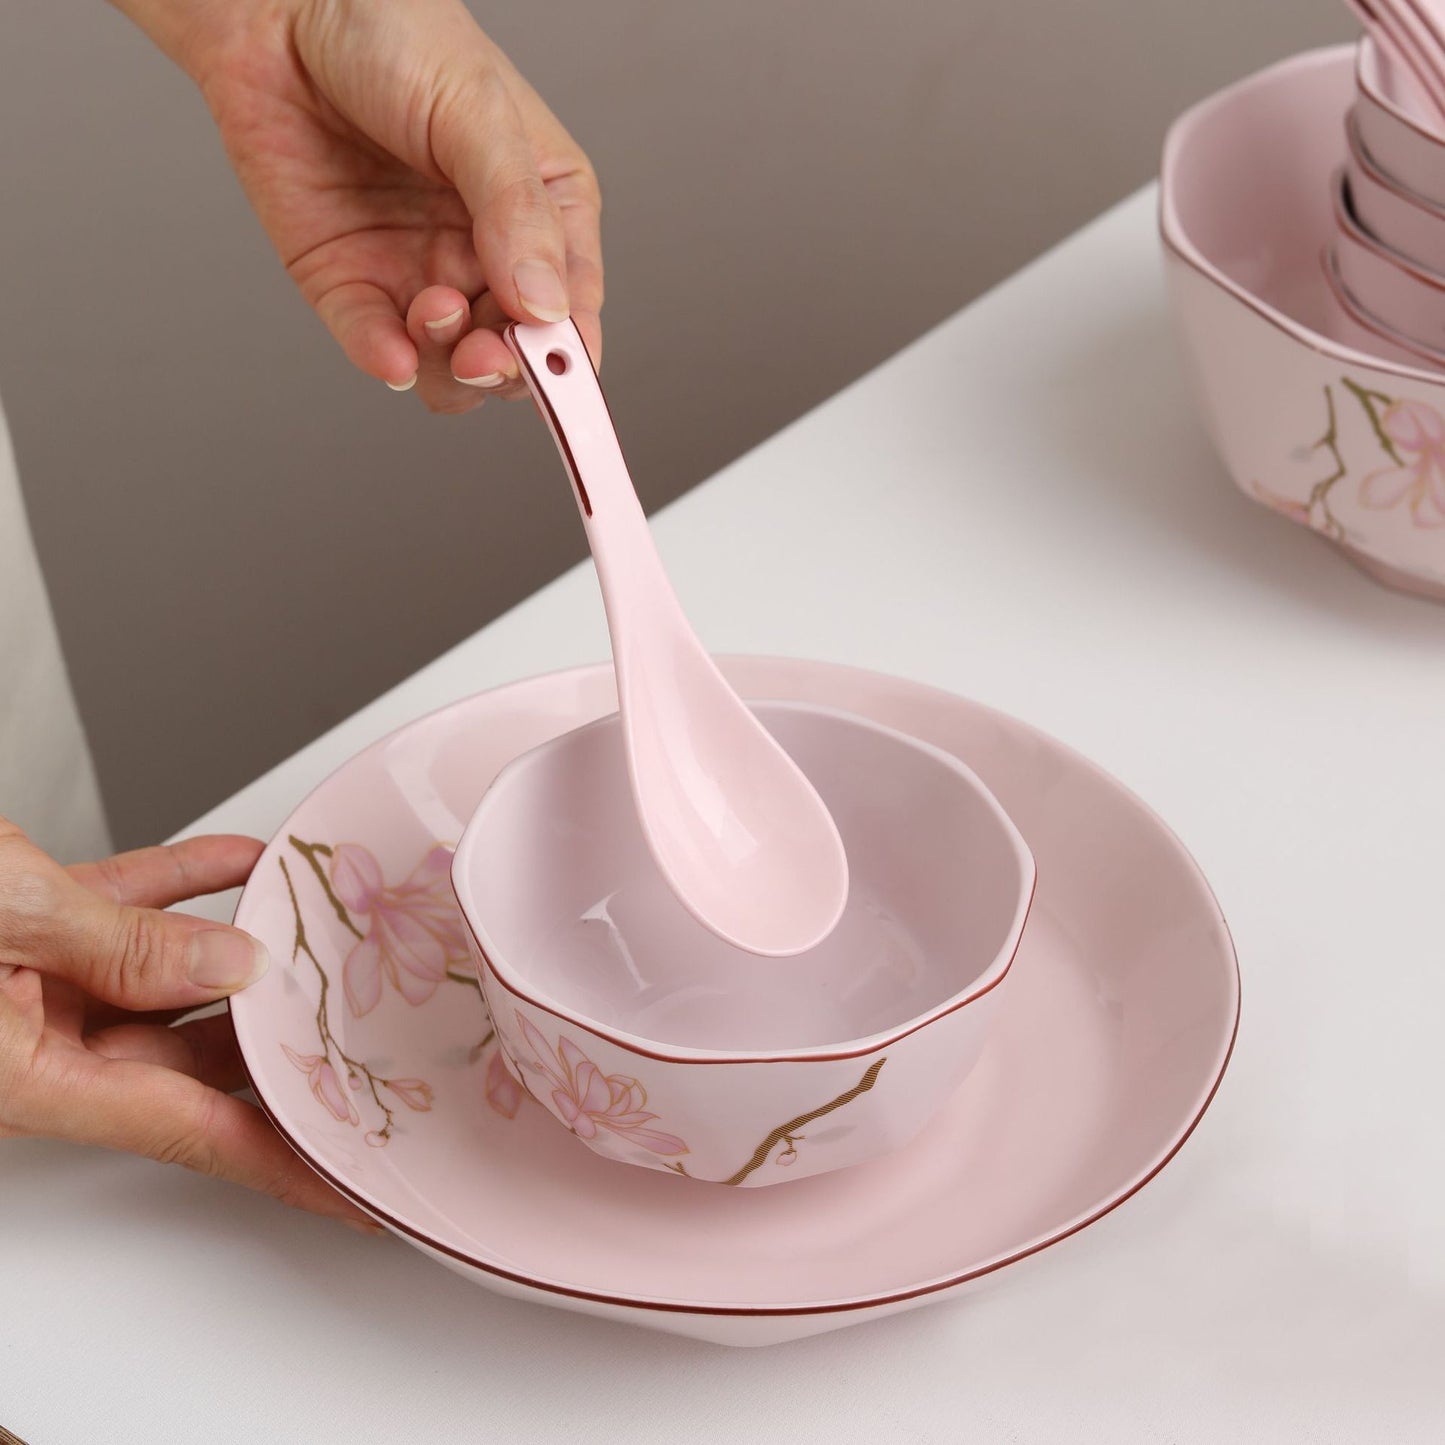 Pink Blossom Dinnerware Set